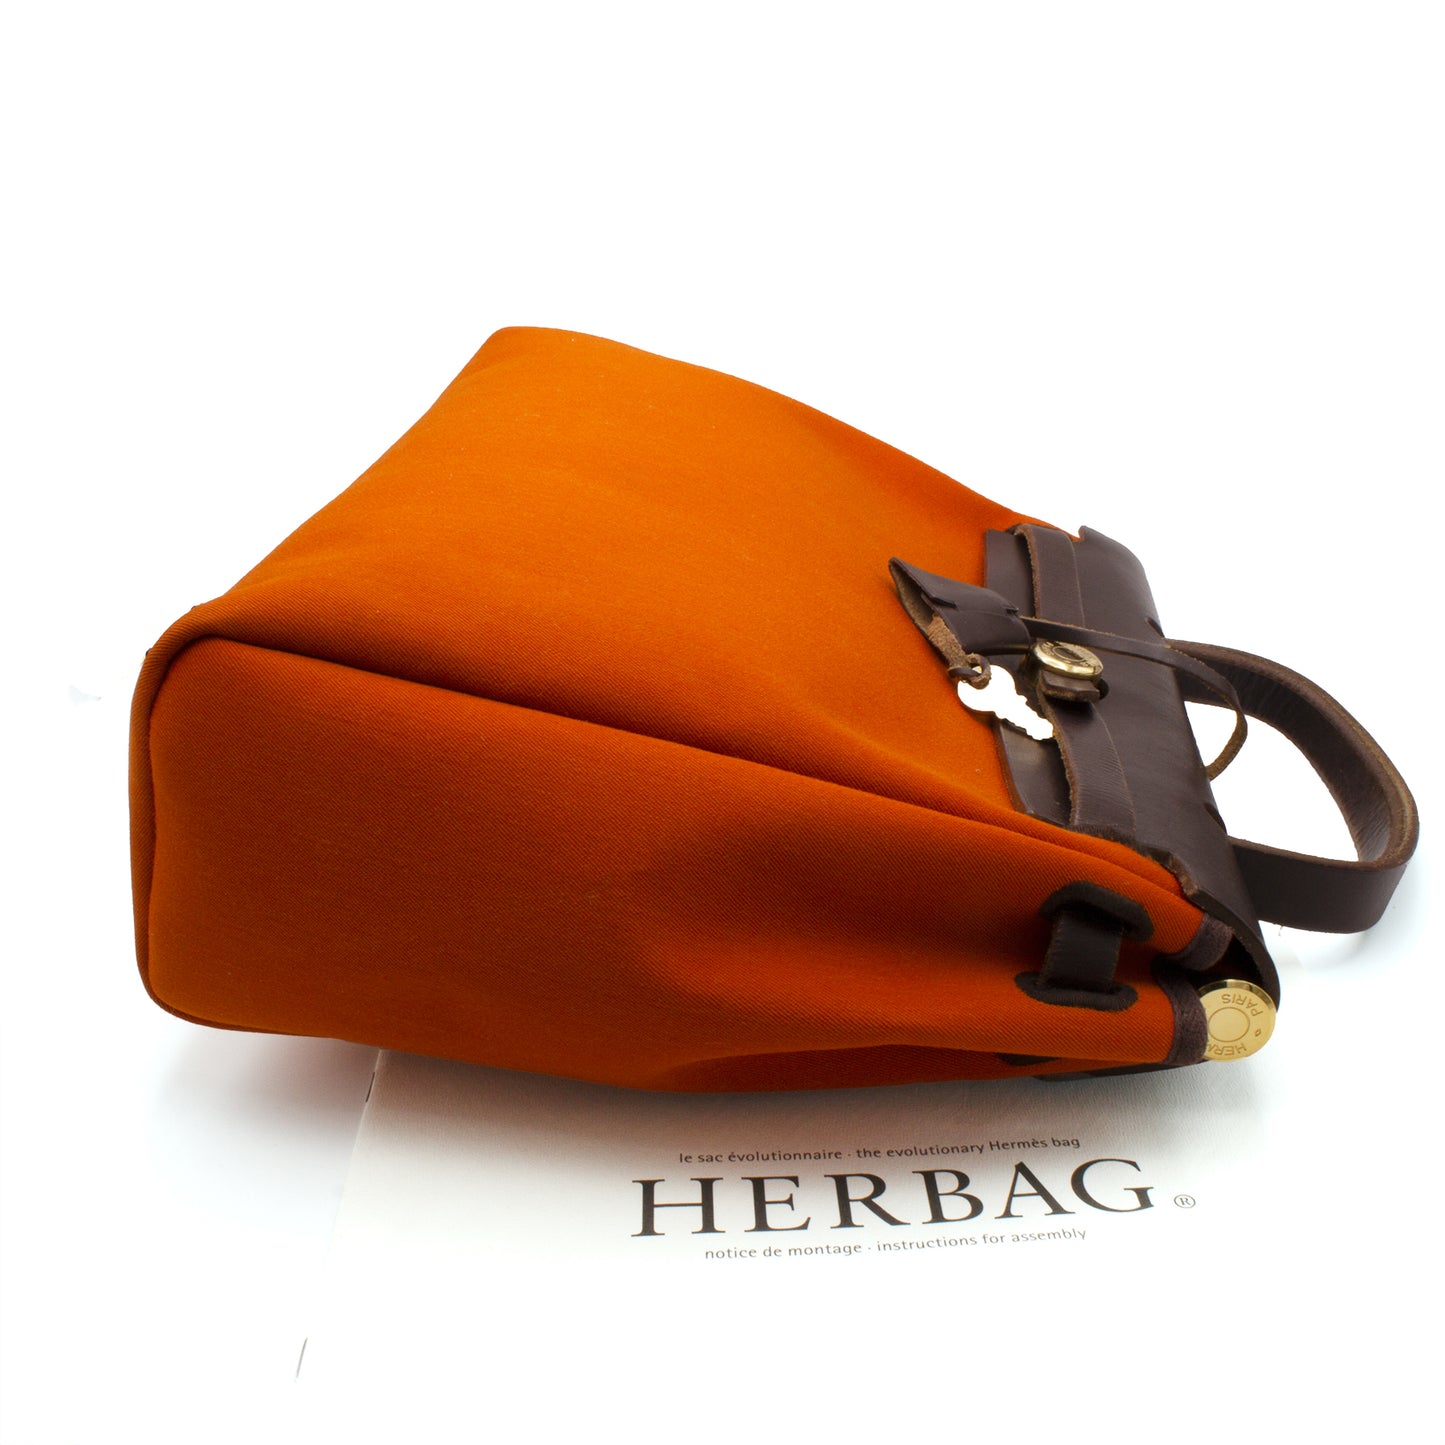 Hermès Herbag handbag